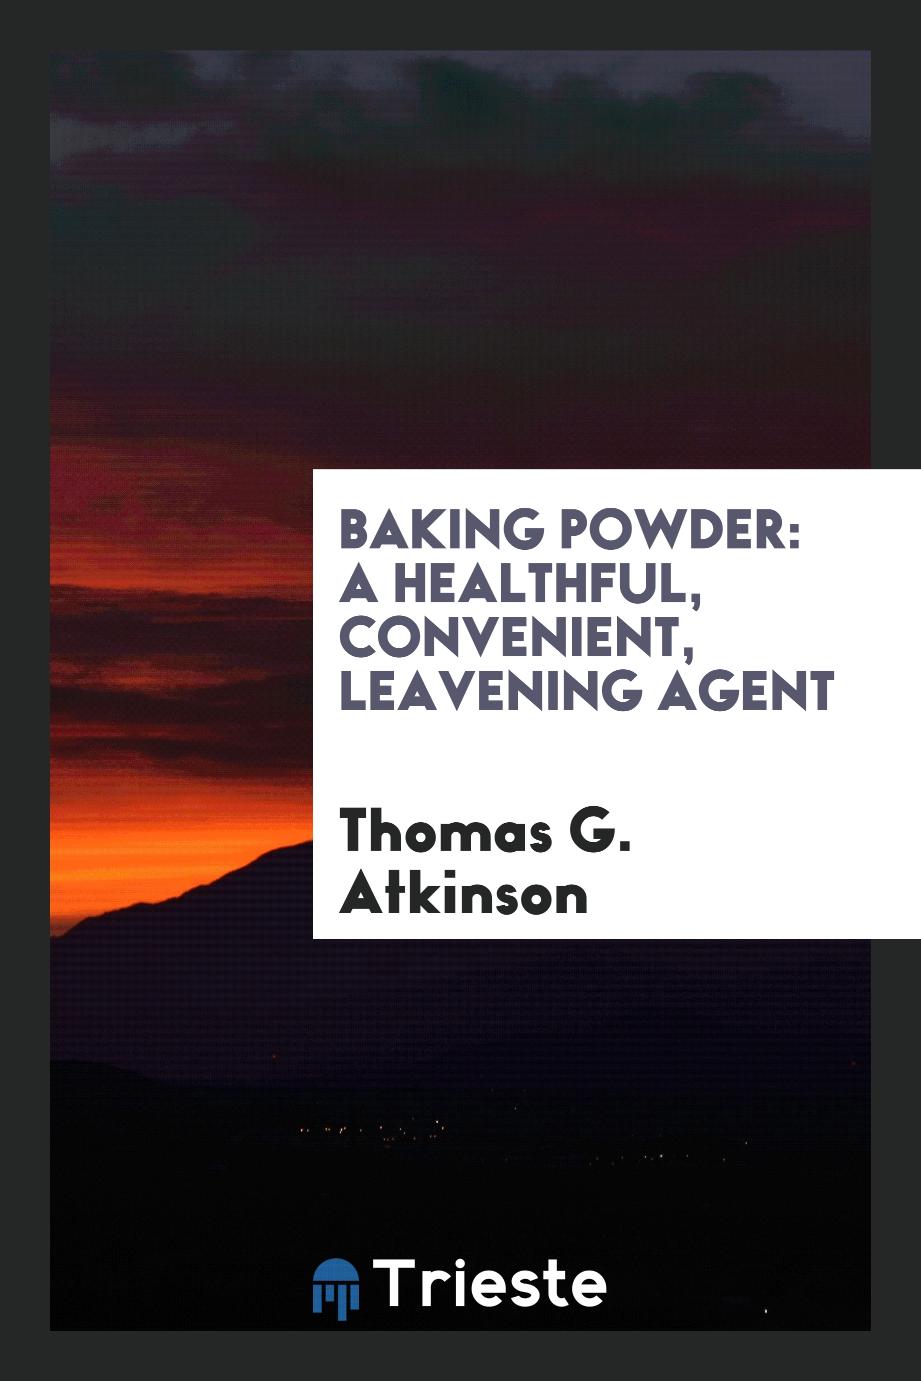 Baking Powder: A Healthful, Convenient, Leavening Agent